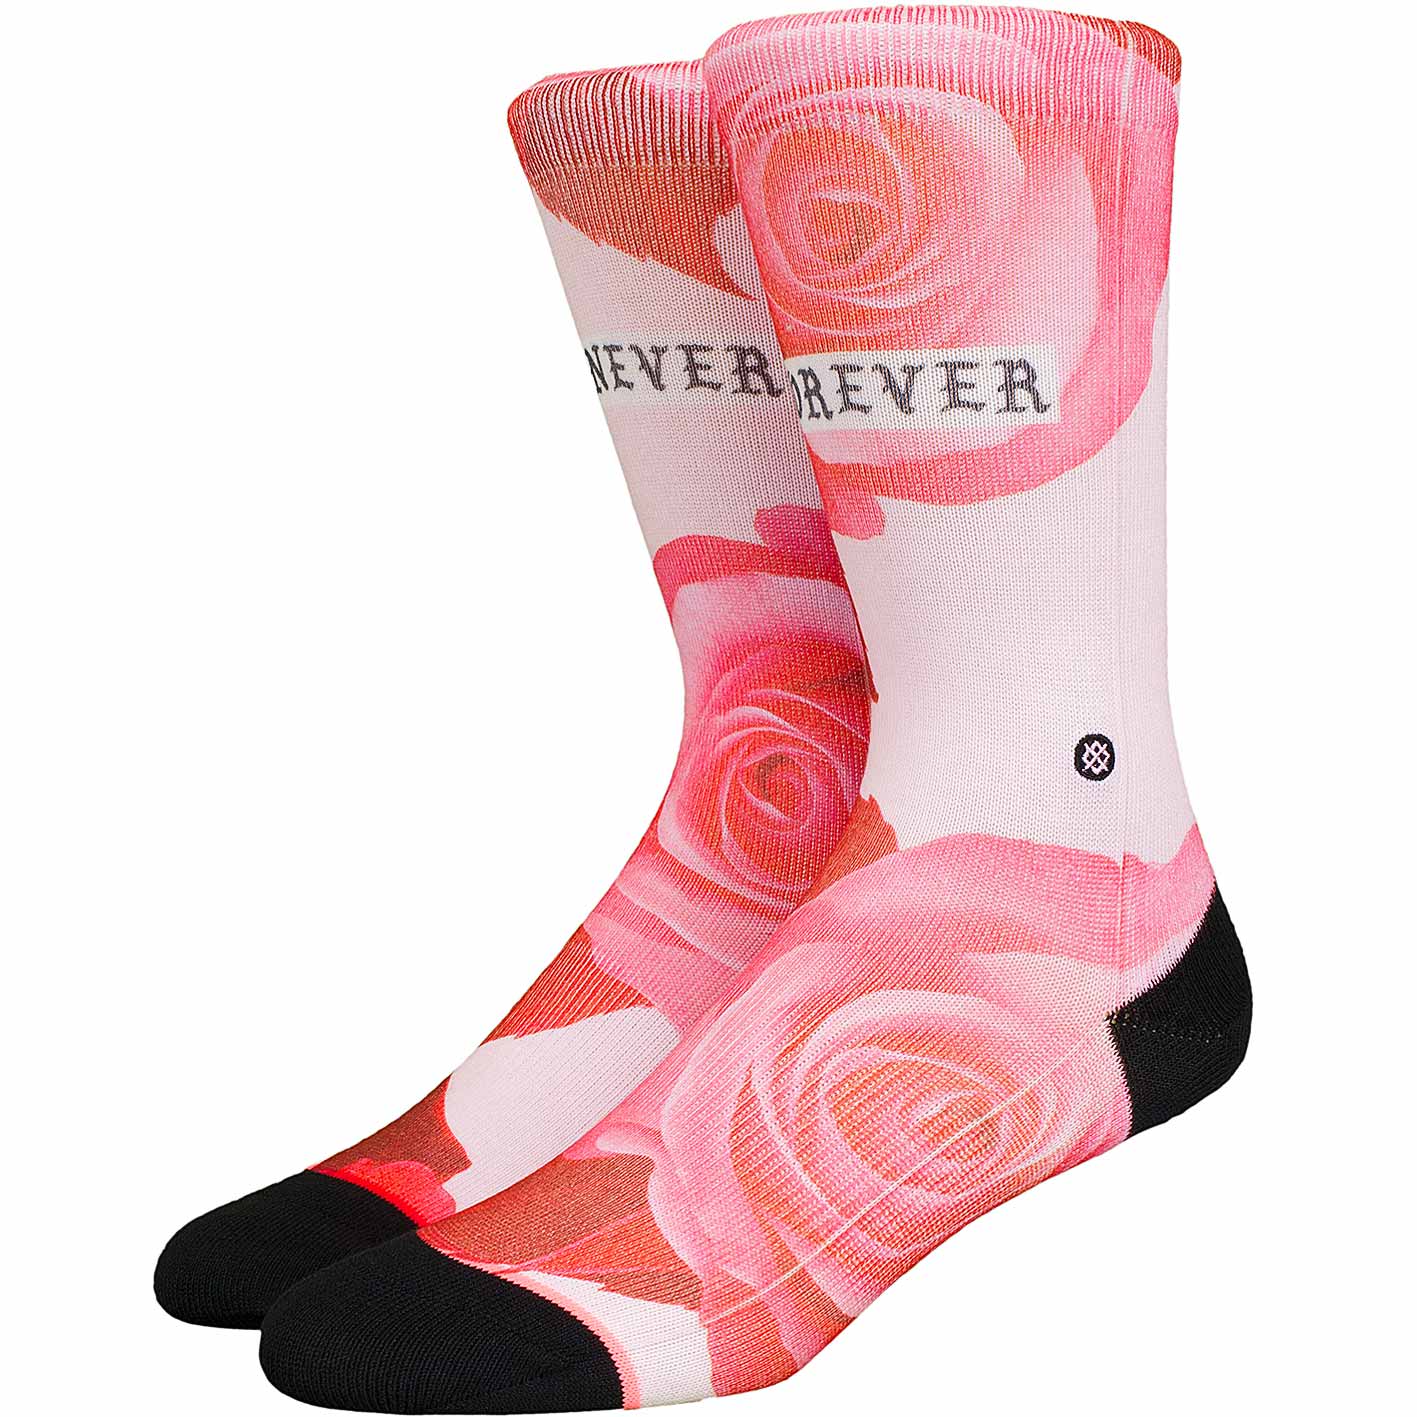 ☆ Stance Damen Socken Dedication Tomboy pink - hier bestellen!